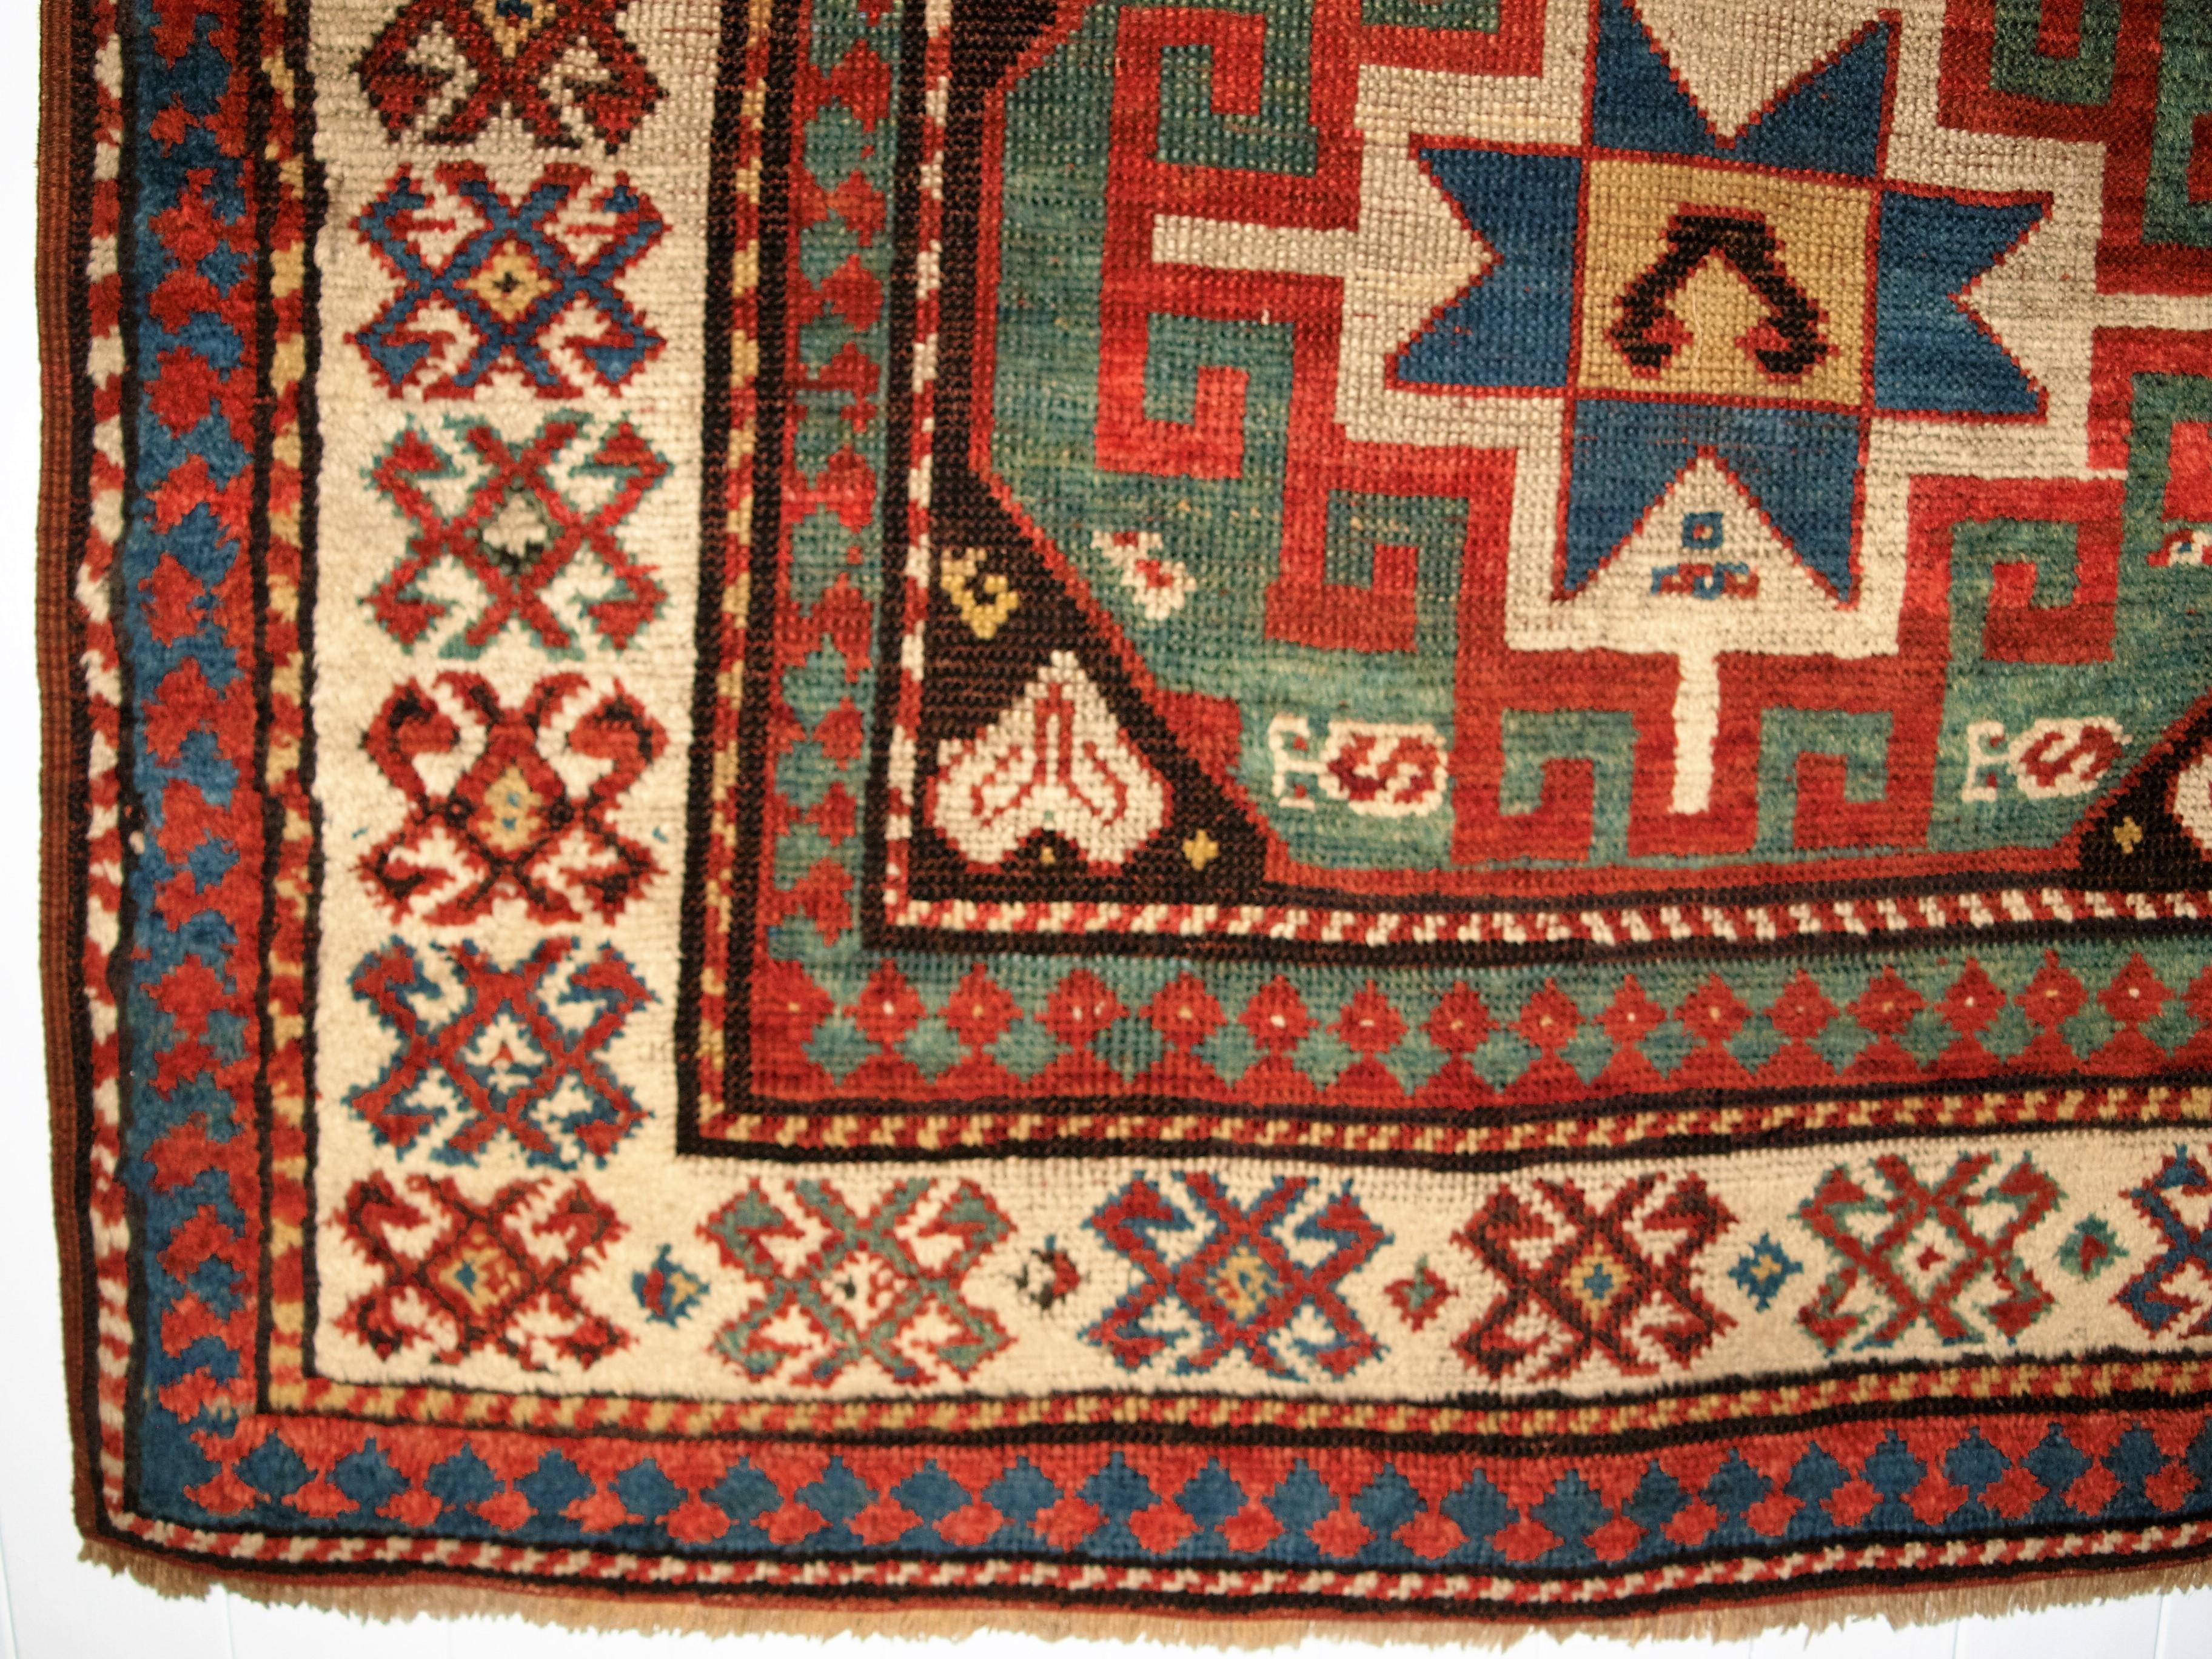 Geometric corner detail of antique caucasian red/brown rug